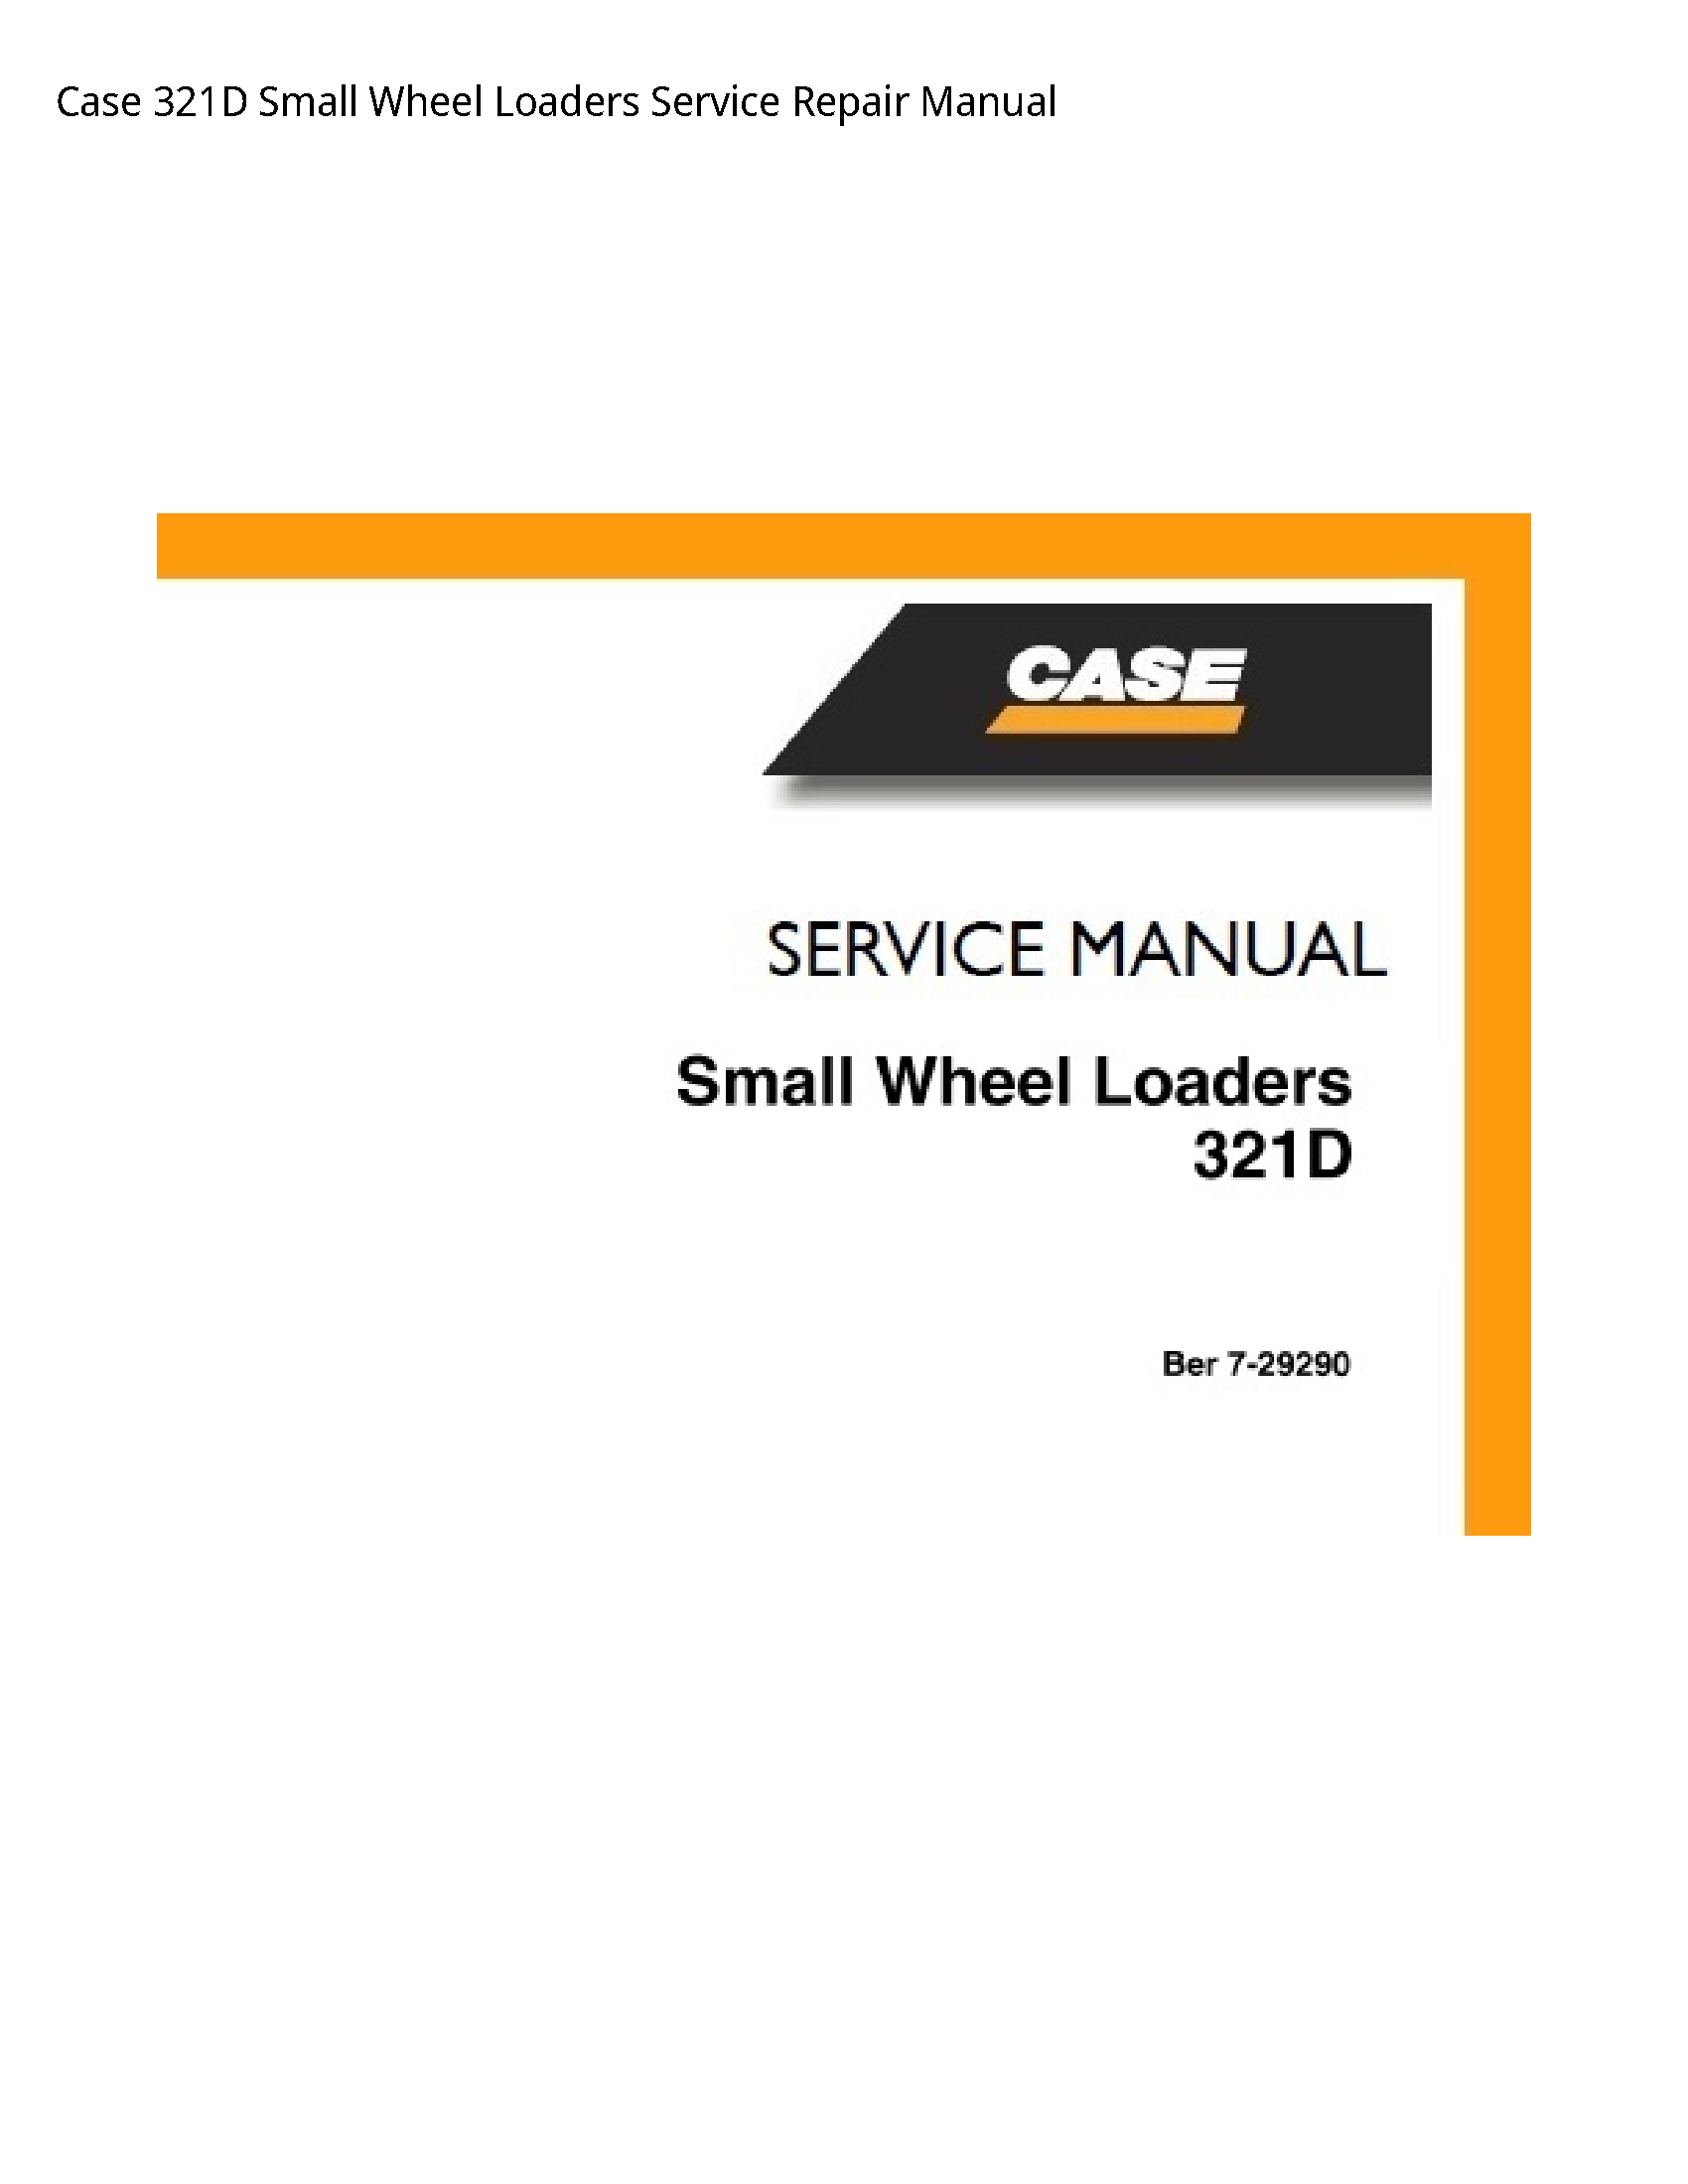 Case/Case IH 321D Small Wheel Loaders manual